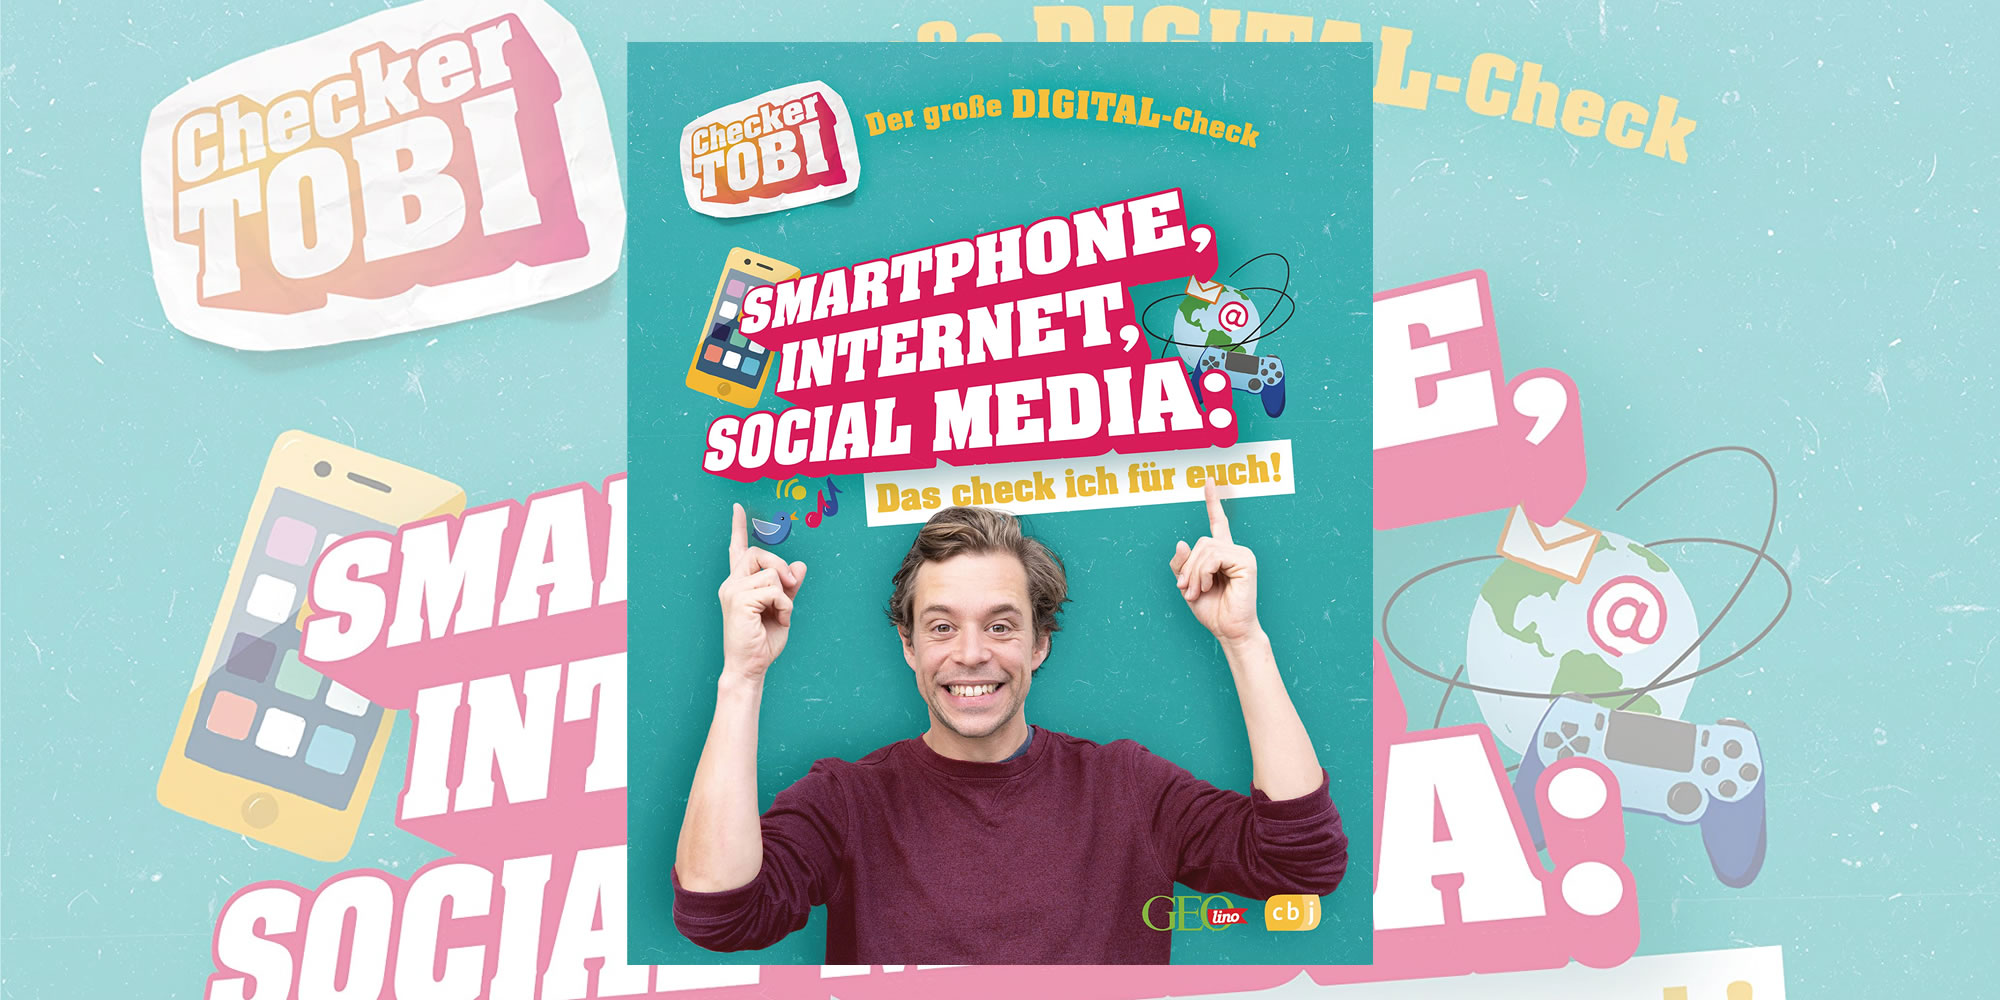 Checker Tobi: Smartphone, Internet, Social Media